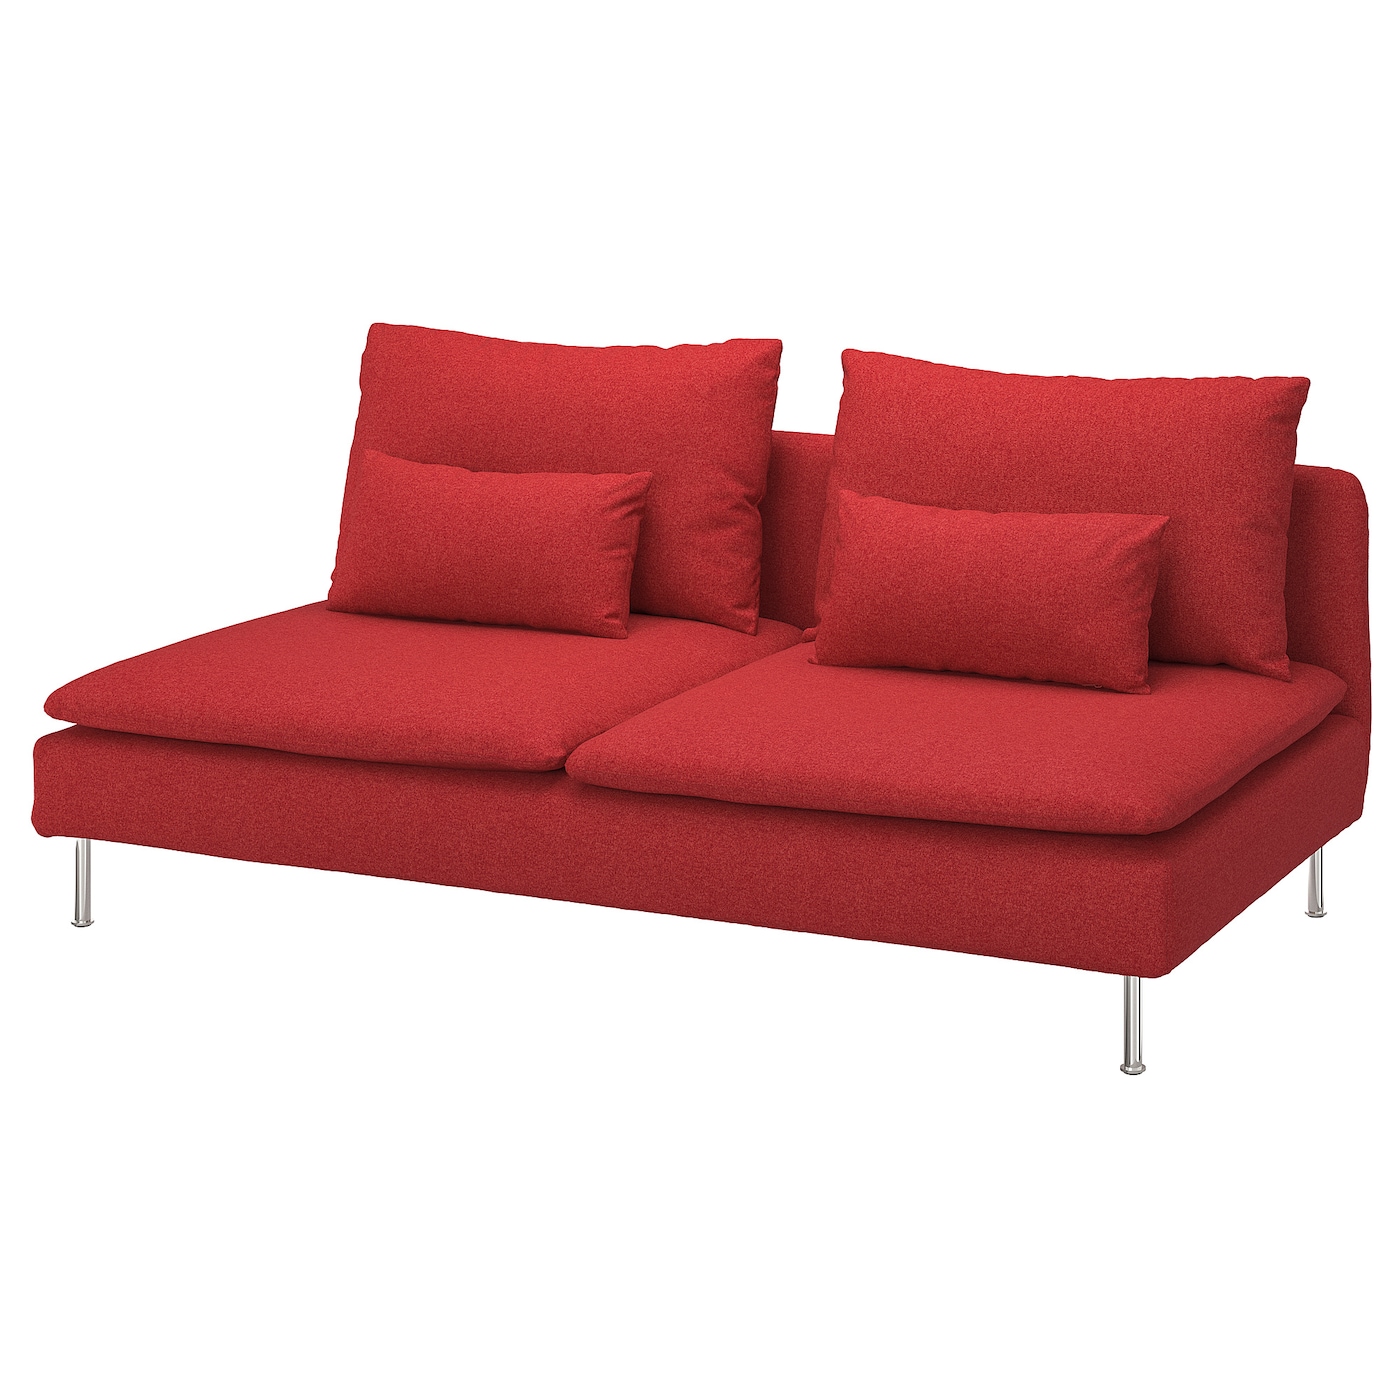 3-местный диван - IKEA SÖDERHAMN/SODERHAMN/СЁДЕРХАМН ИКЕА, 186х69х99 см, красный